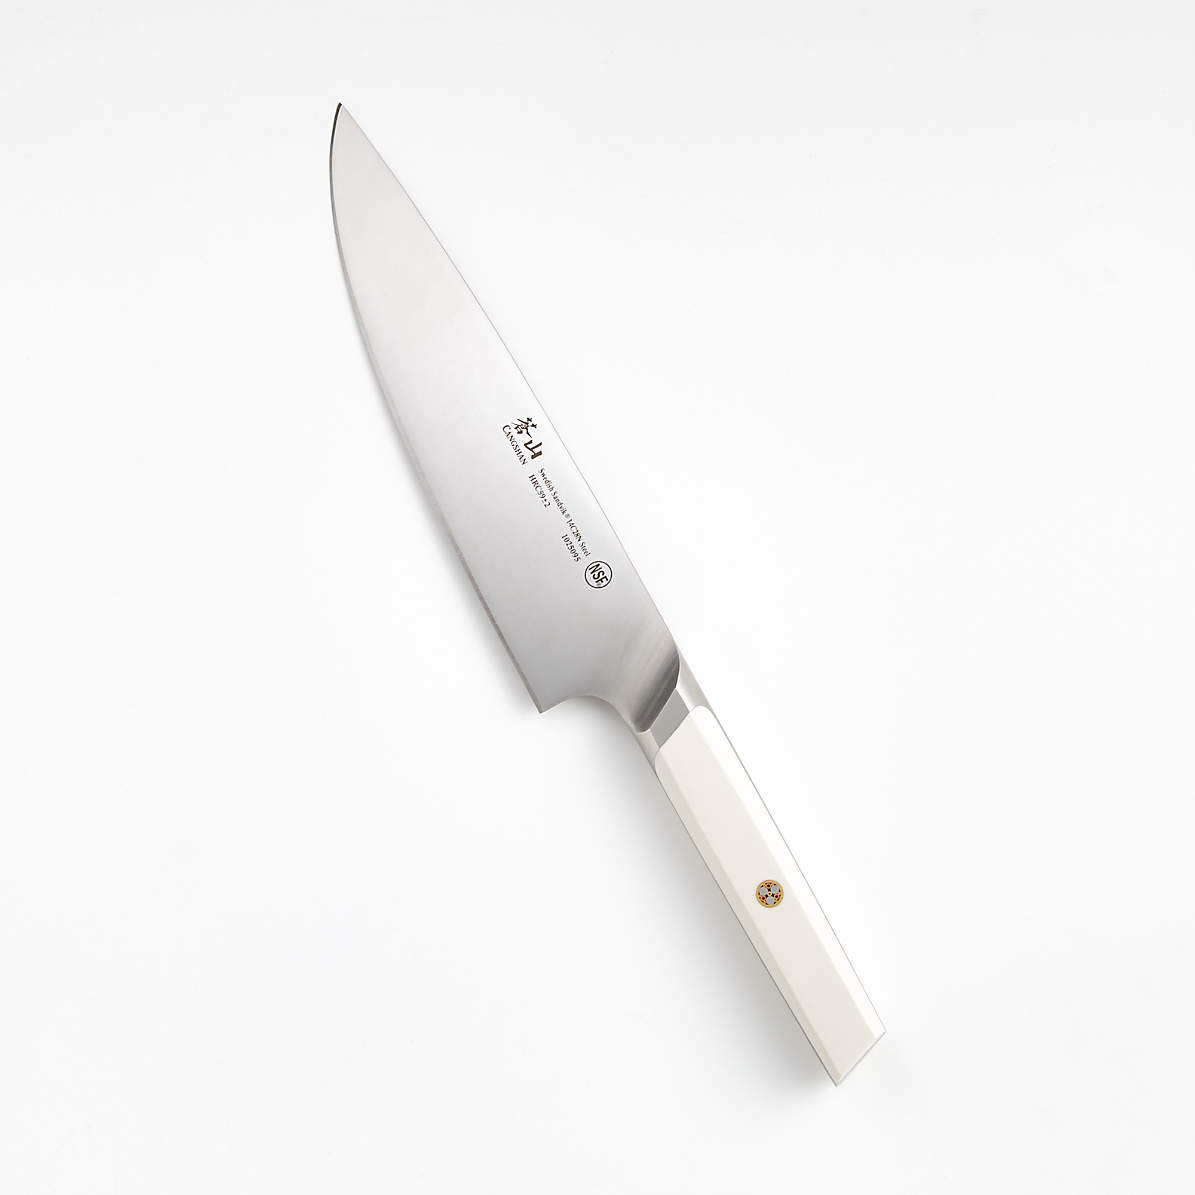 Cangshan Everest White 8-Piece Knife Block Set + Reviews